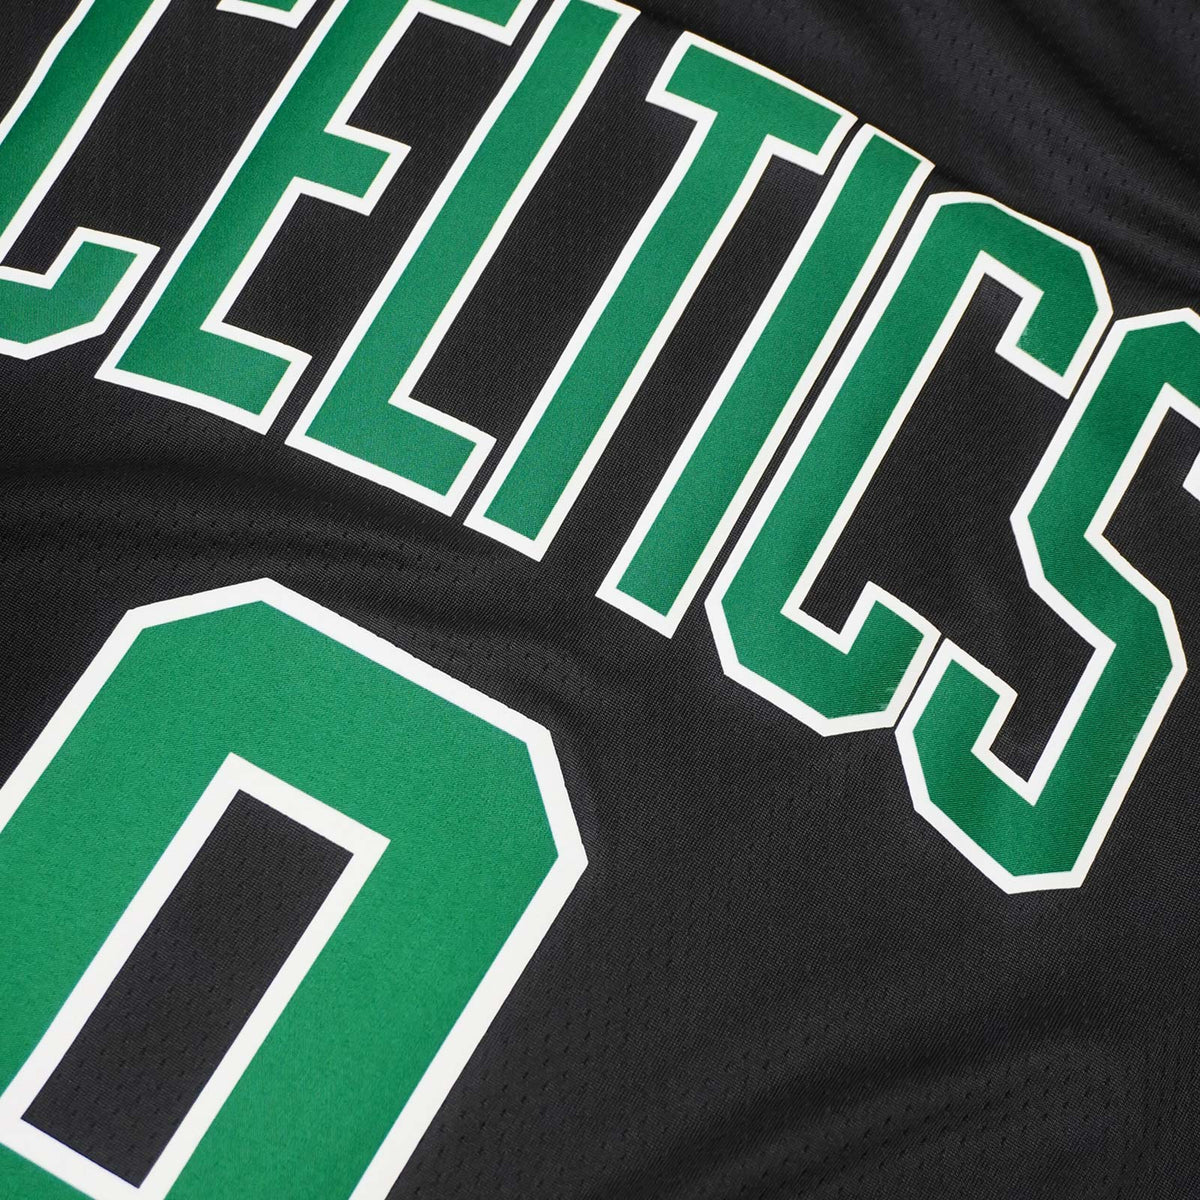 Boston Celtics Statement Edition Men's Jordan Dri-FIT NBA Swingman Jersey.